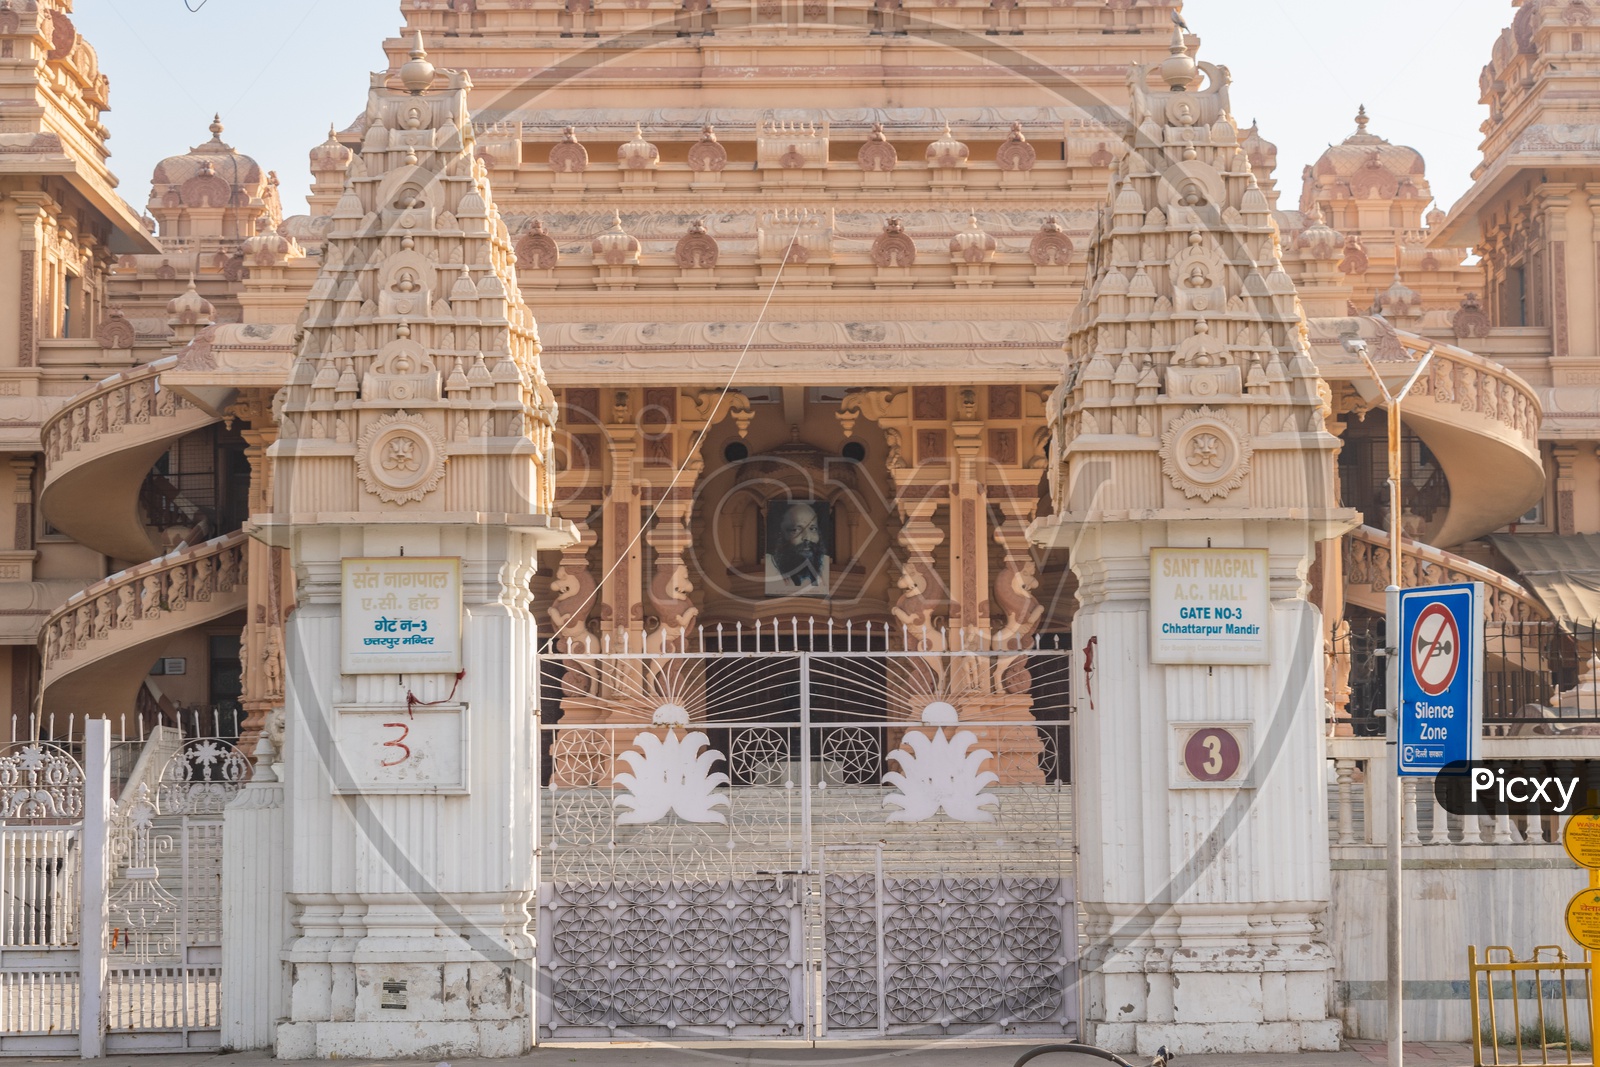 Sant Nagpal(Creator of Chhatarpur Temple) A.C Hall, Chhatarpur Temple, Delhi